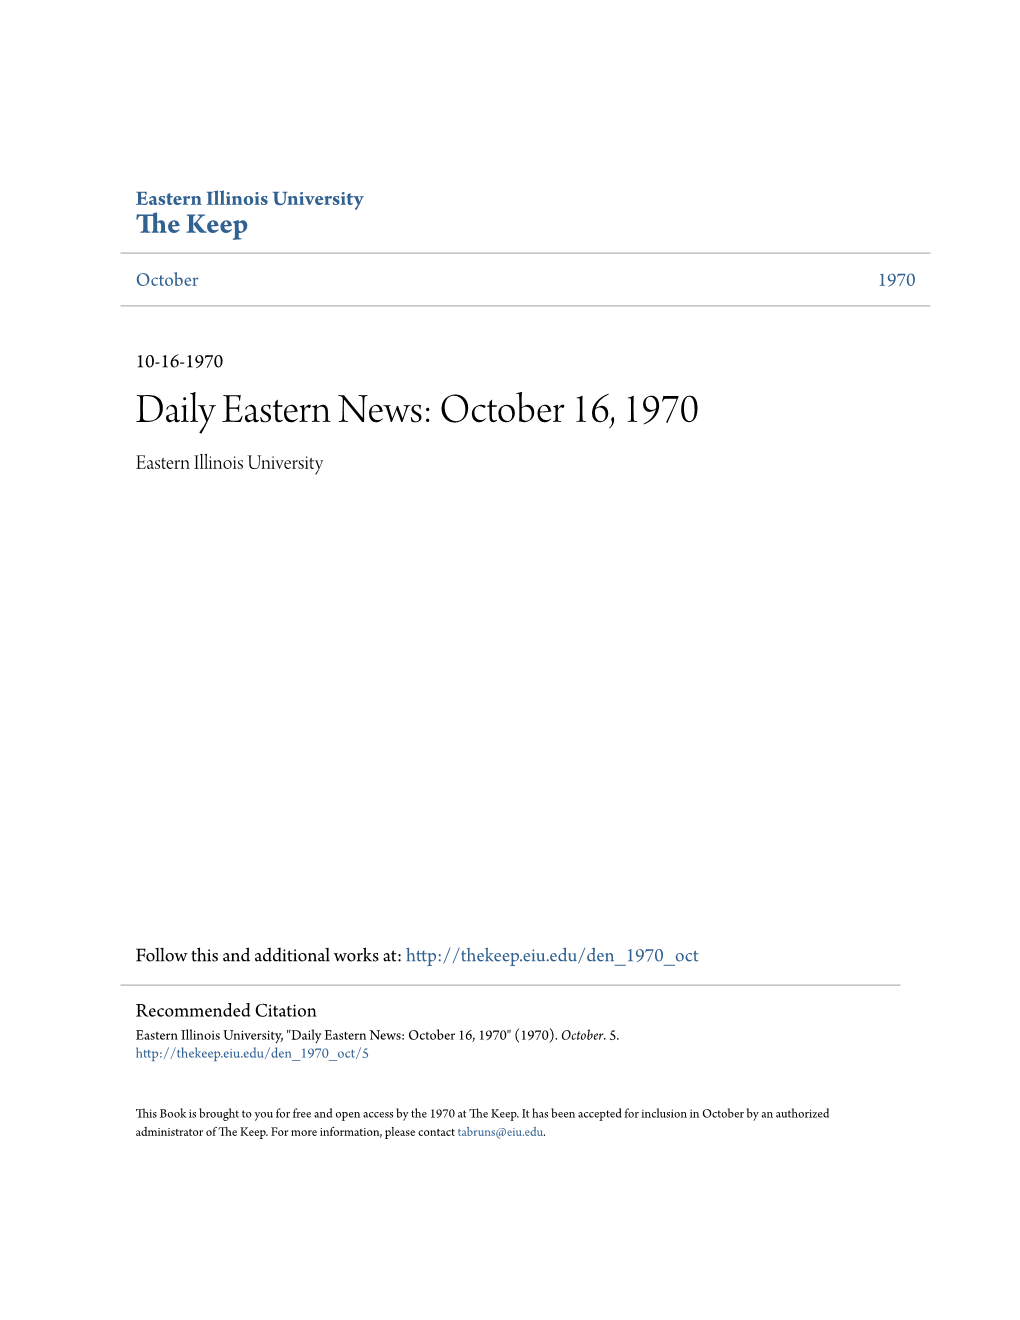 Daily Eastern News: October 16, 1970 Eastern Illinois University